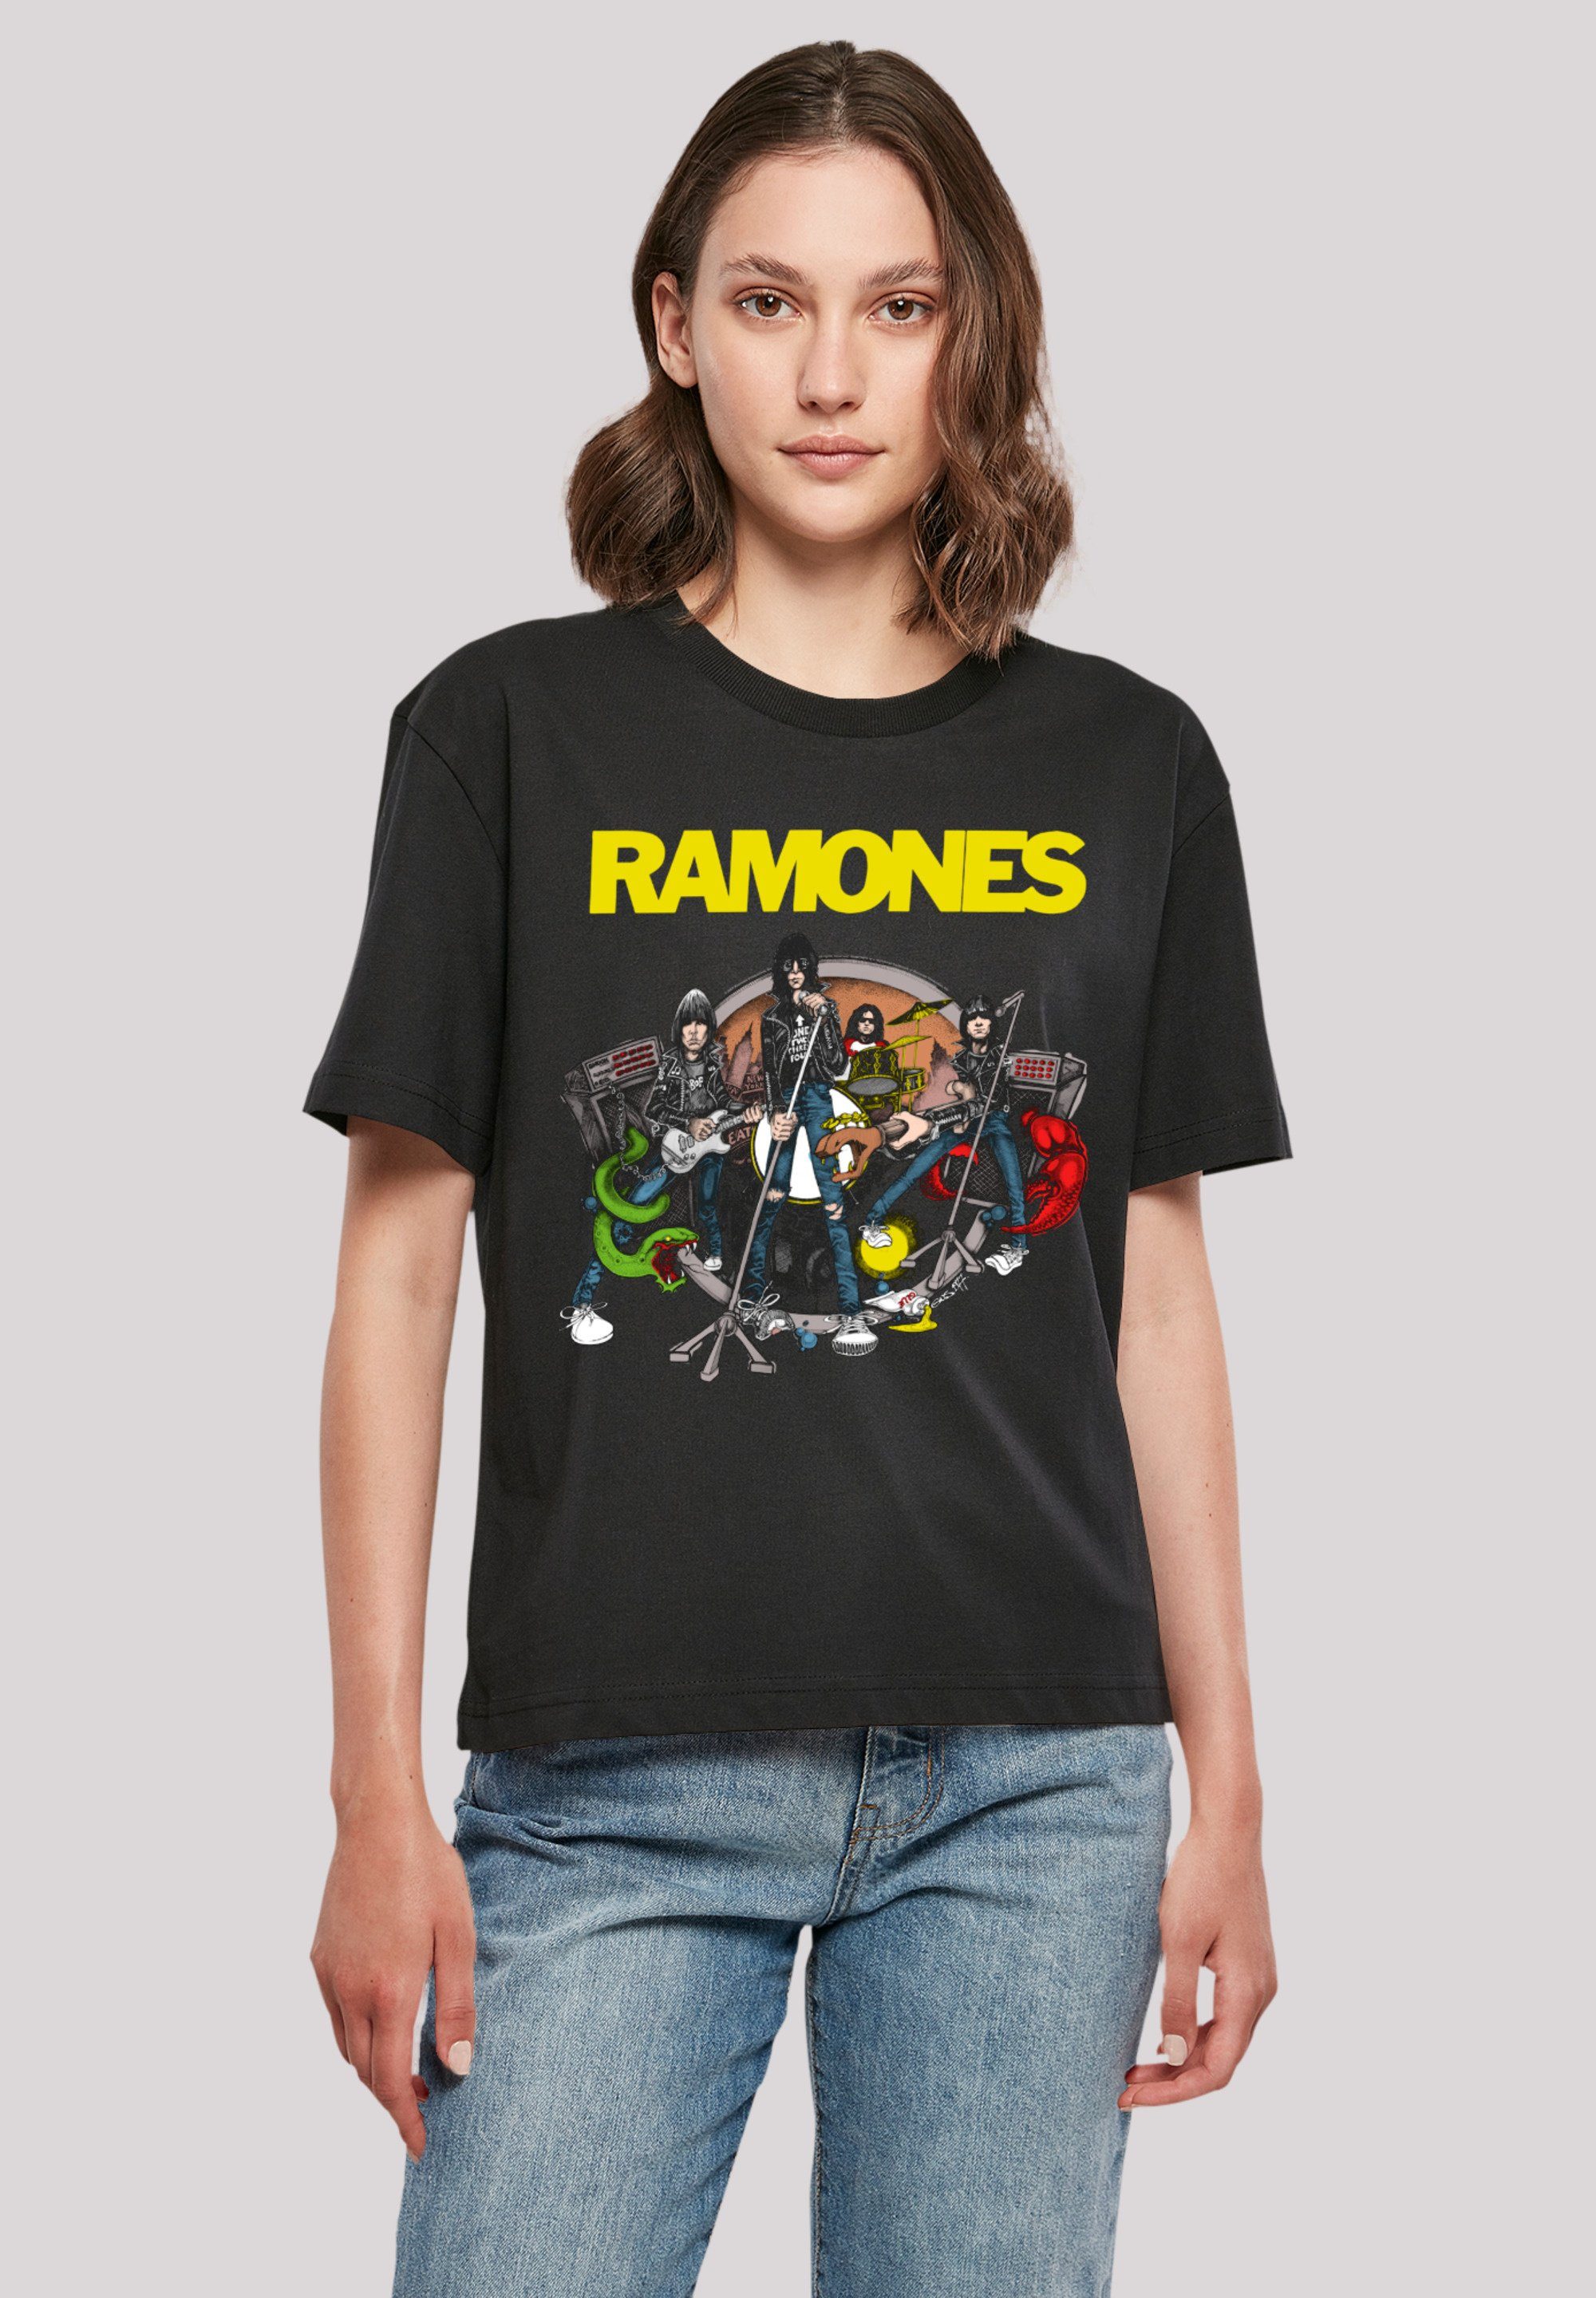 Ramones Band, Band Qualität, F4NT4STIC To Musik Rock-Musik Ruin Premium Rock T-Shirt Road